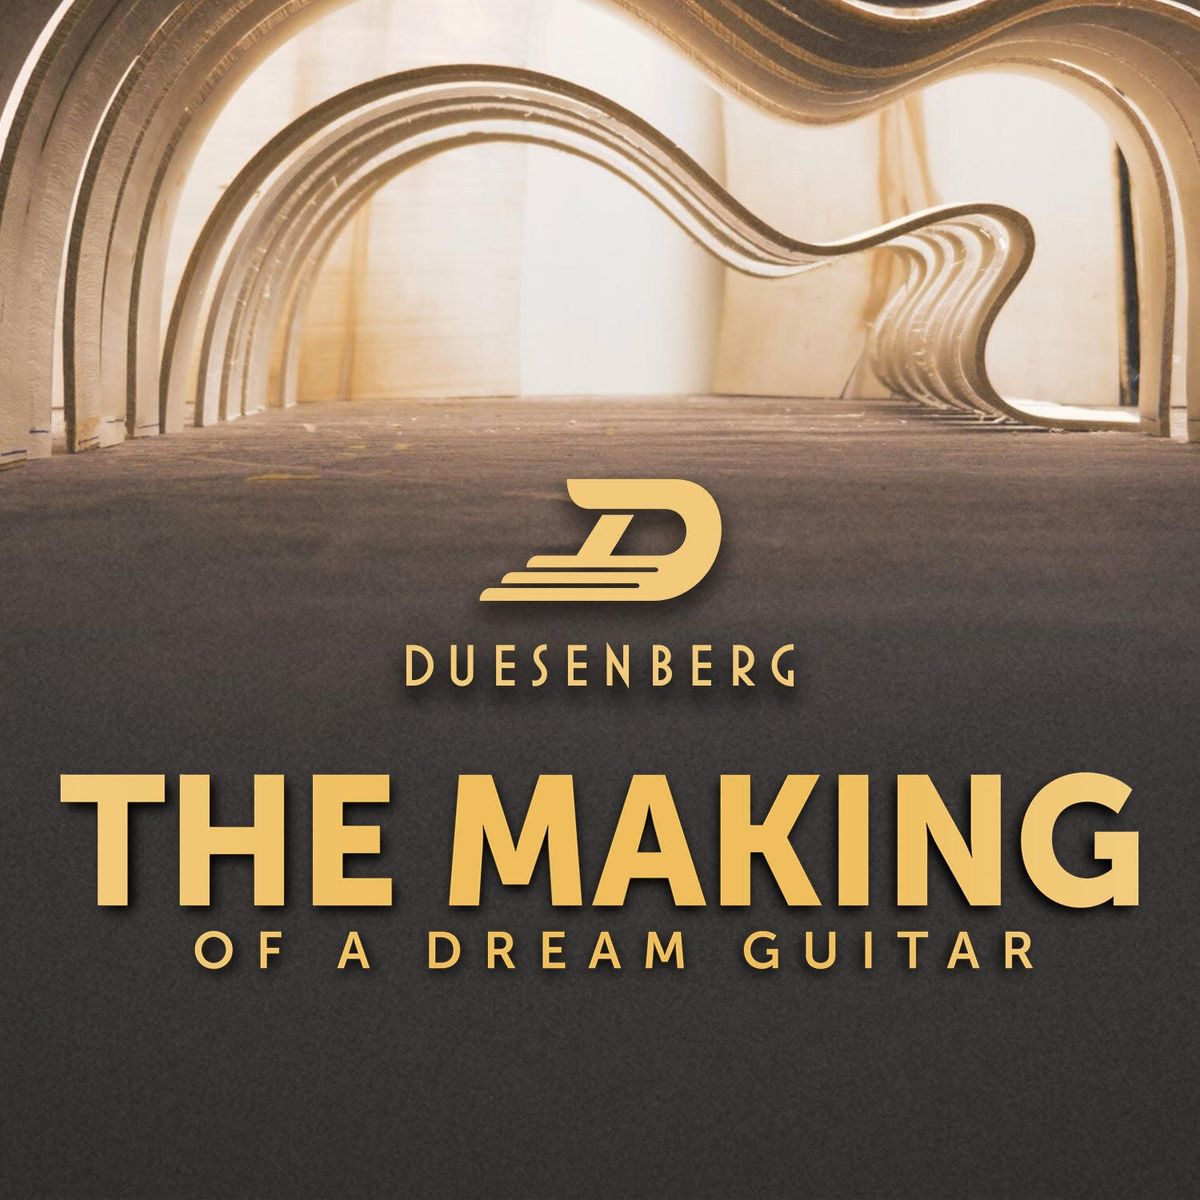 Duesenberg Guitars Factory Tour